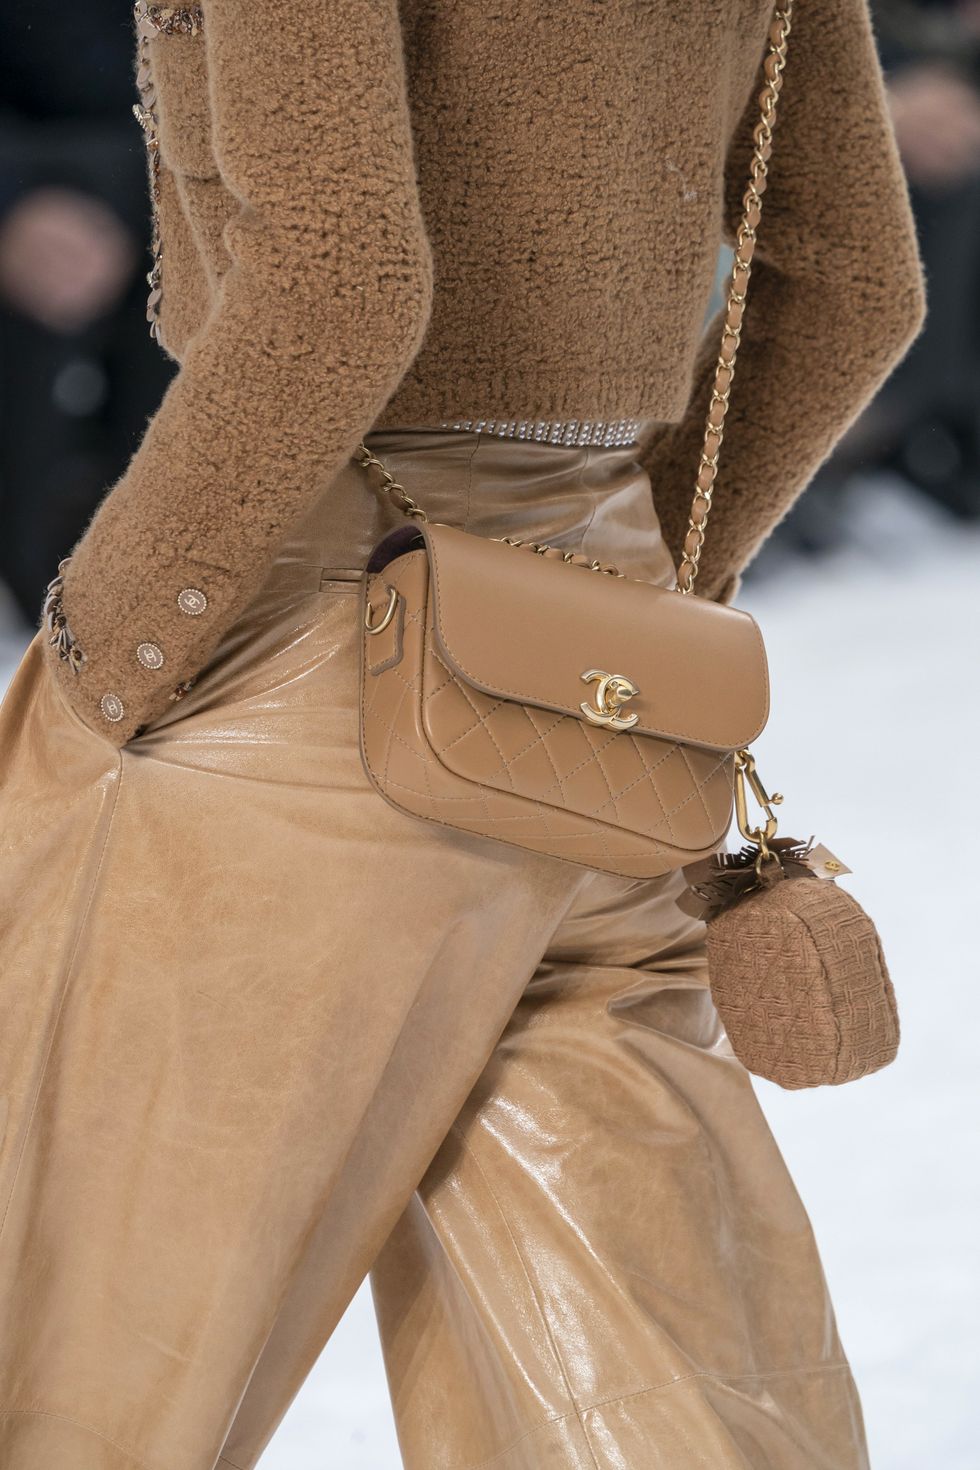 Vintage Chanel Bags: A Celebrity Favorite - Vintage Fashion Guide